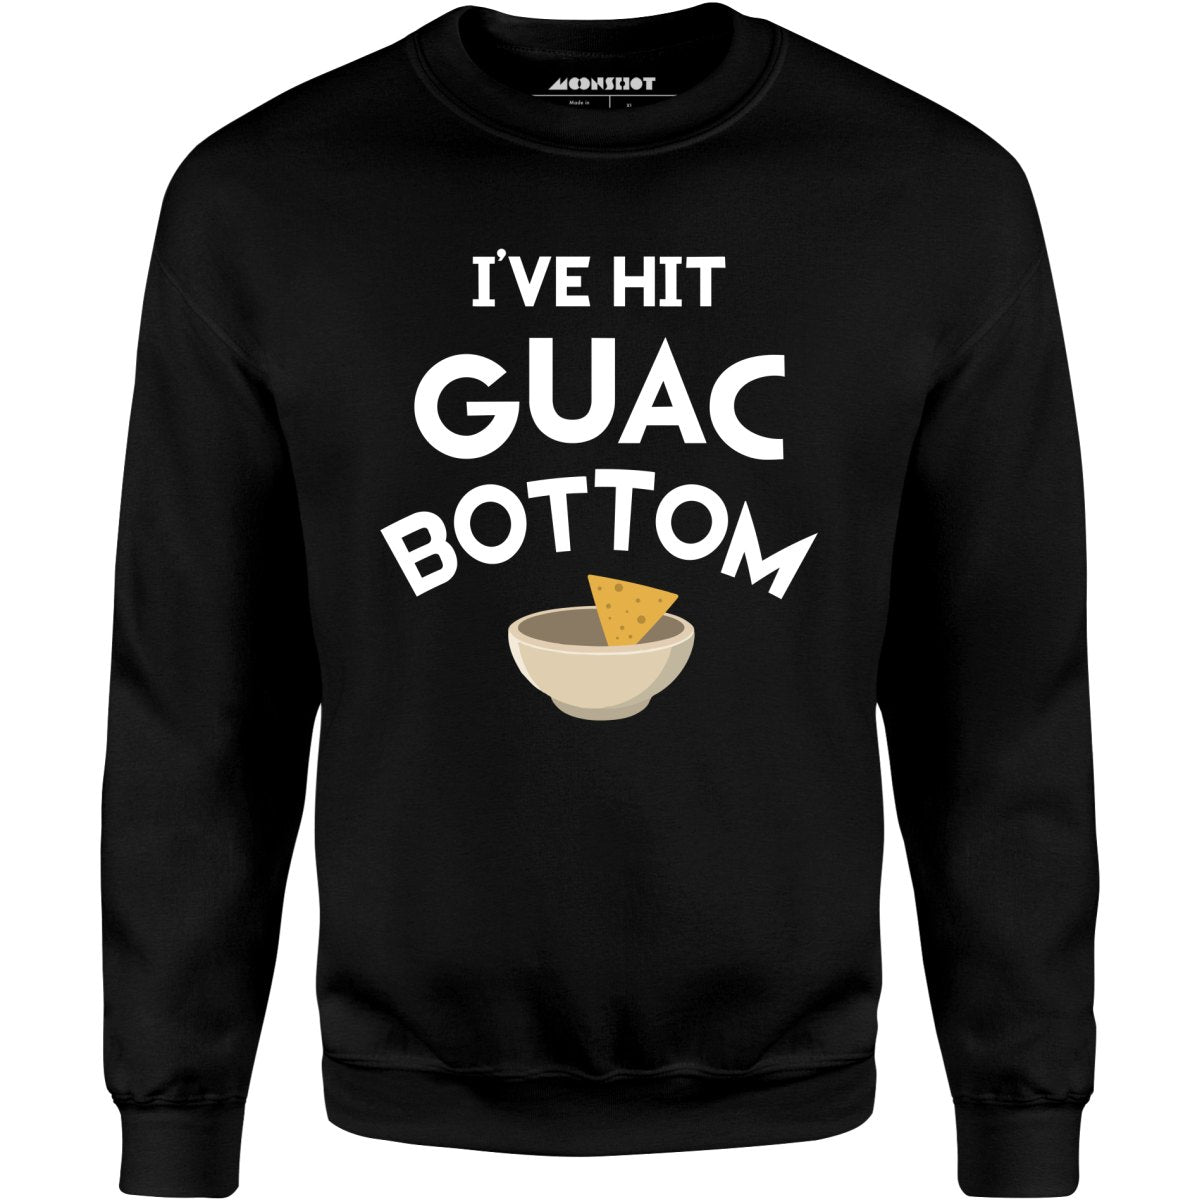 I've Hit Guac Bottom - Unisex Sweatshirt